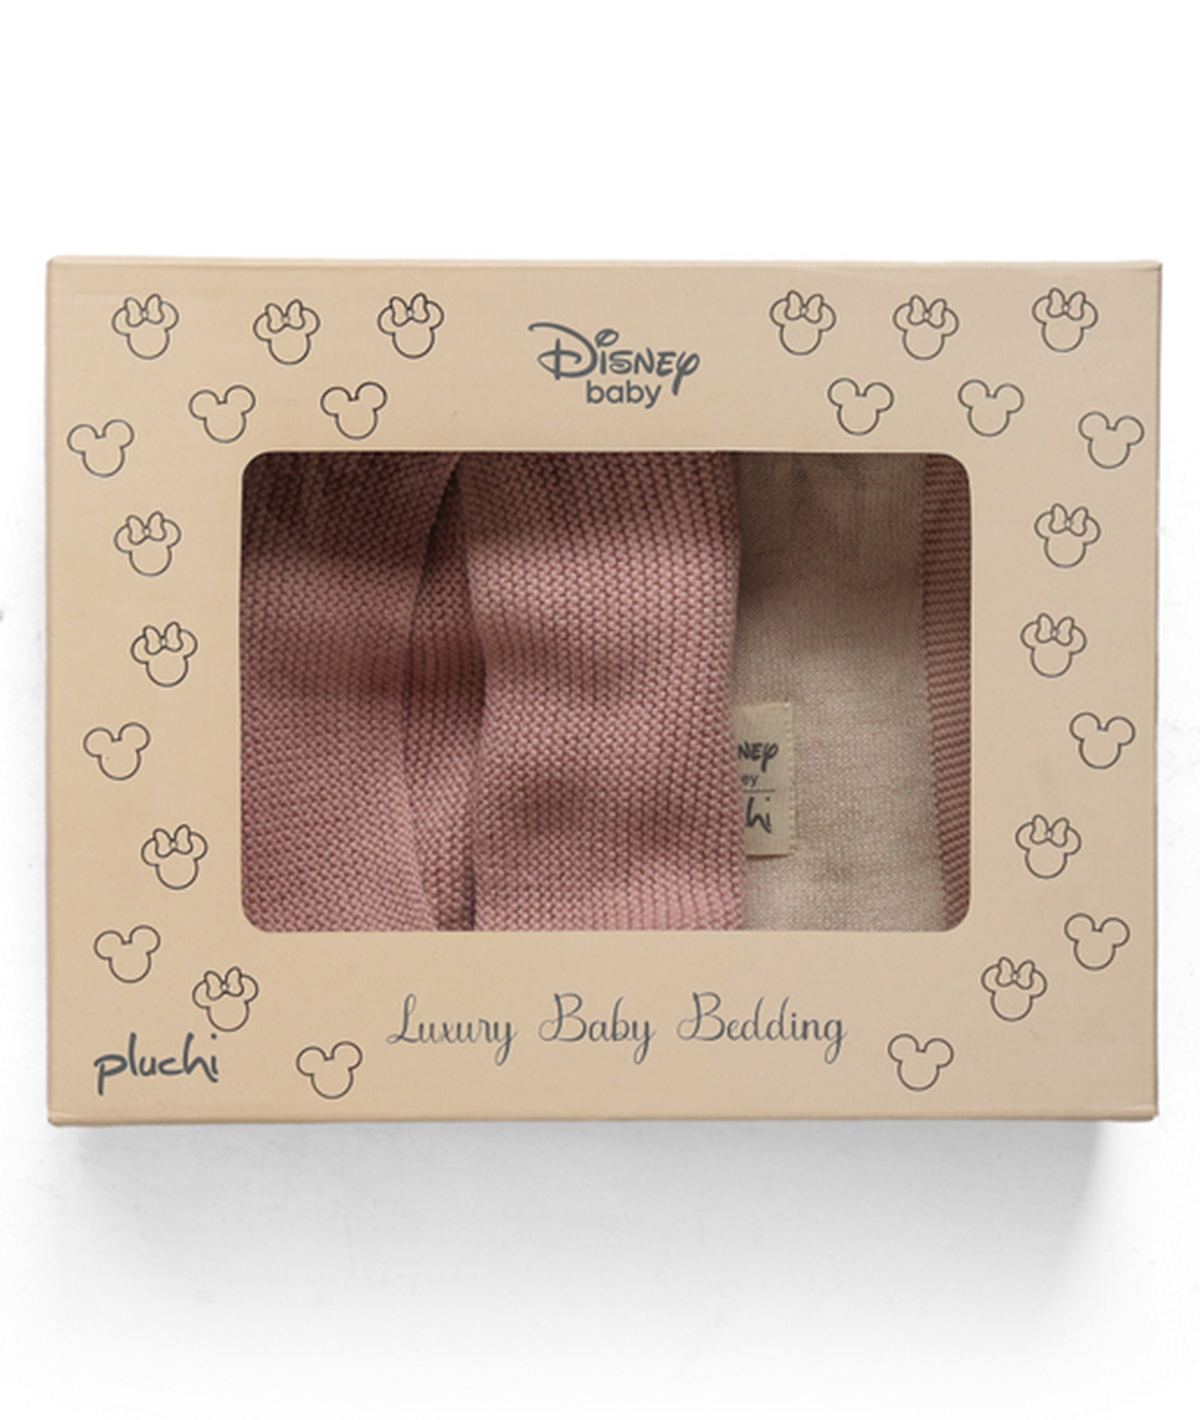 disney baby gift set